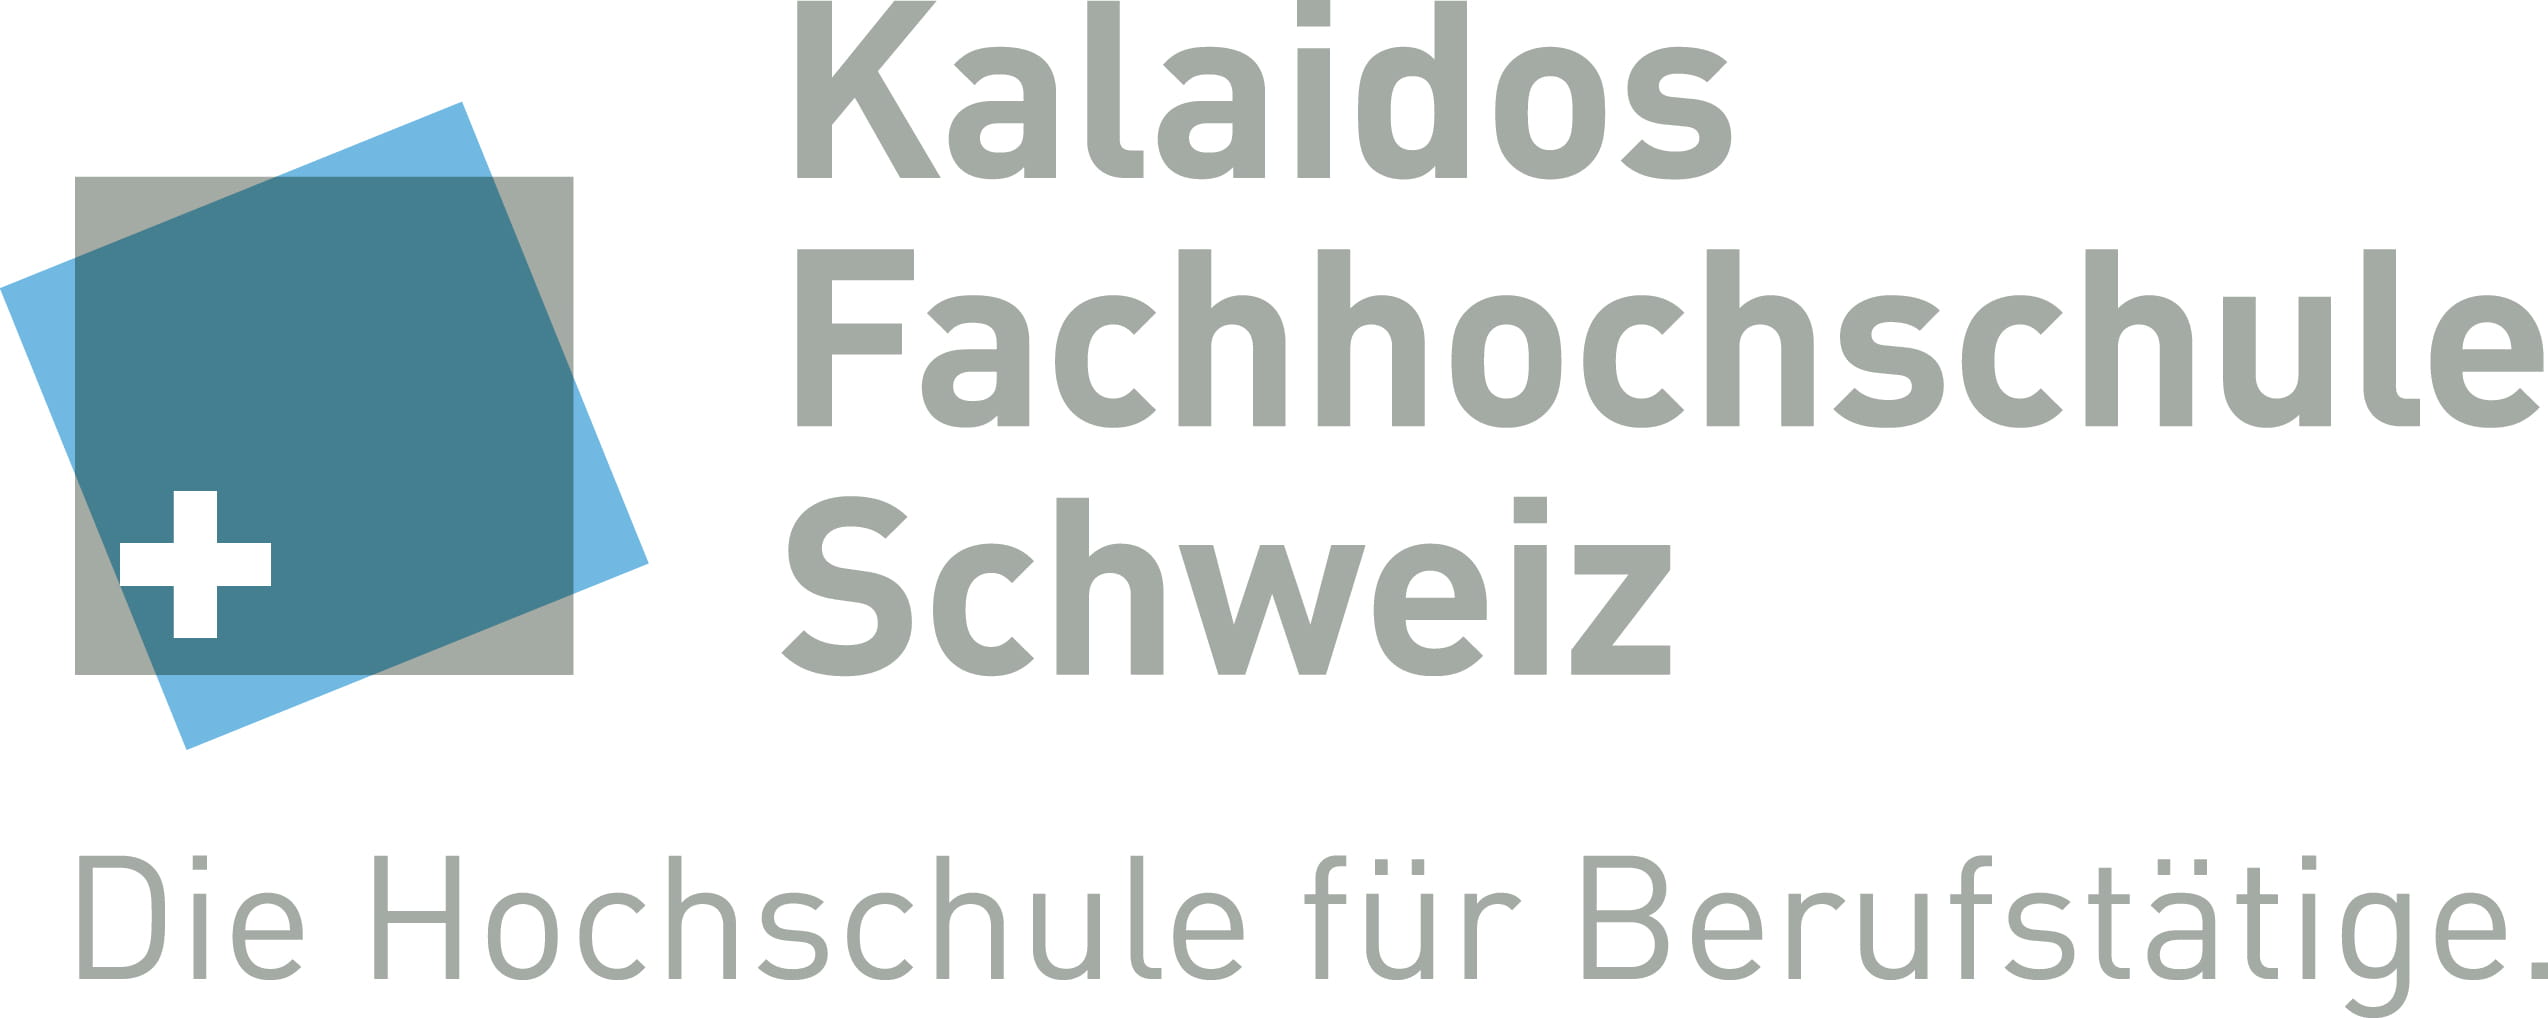 Logo Kalaidos Fachhochschule mit Claim